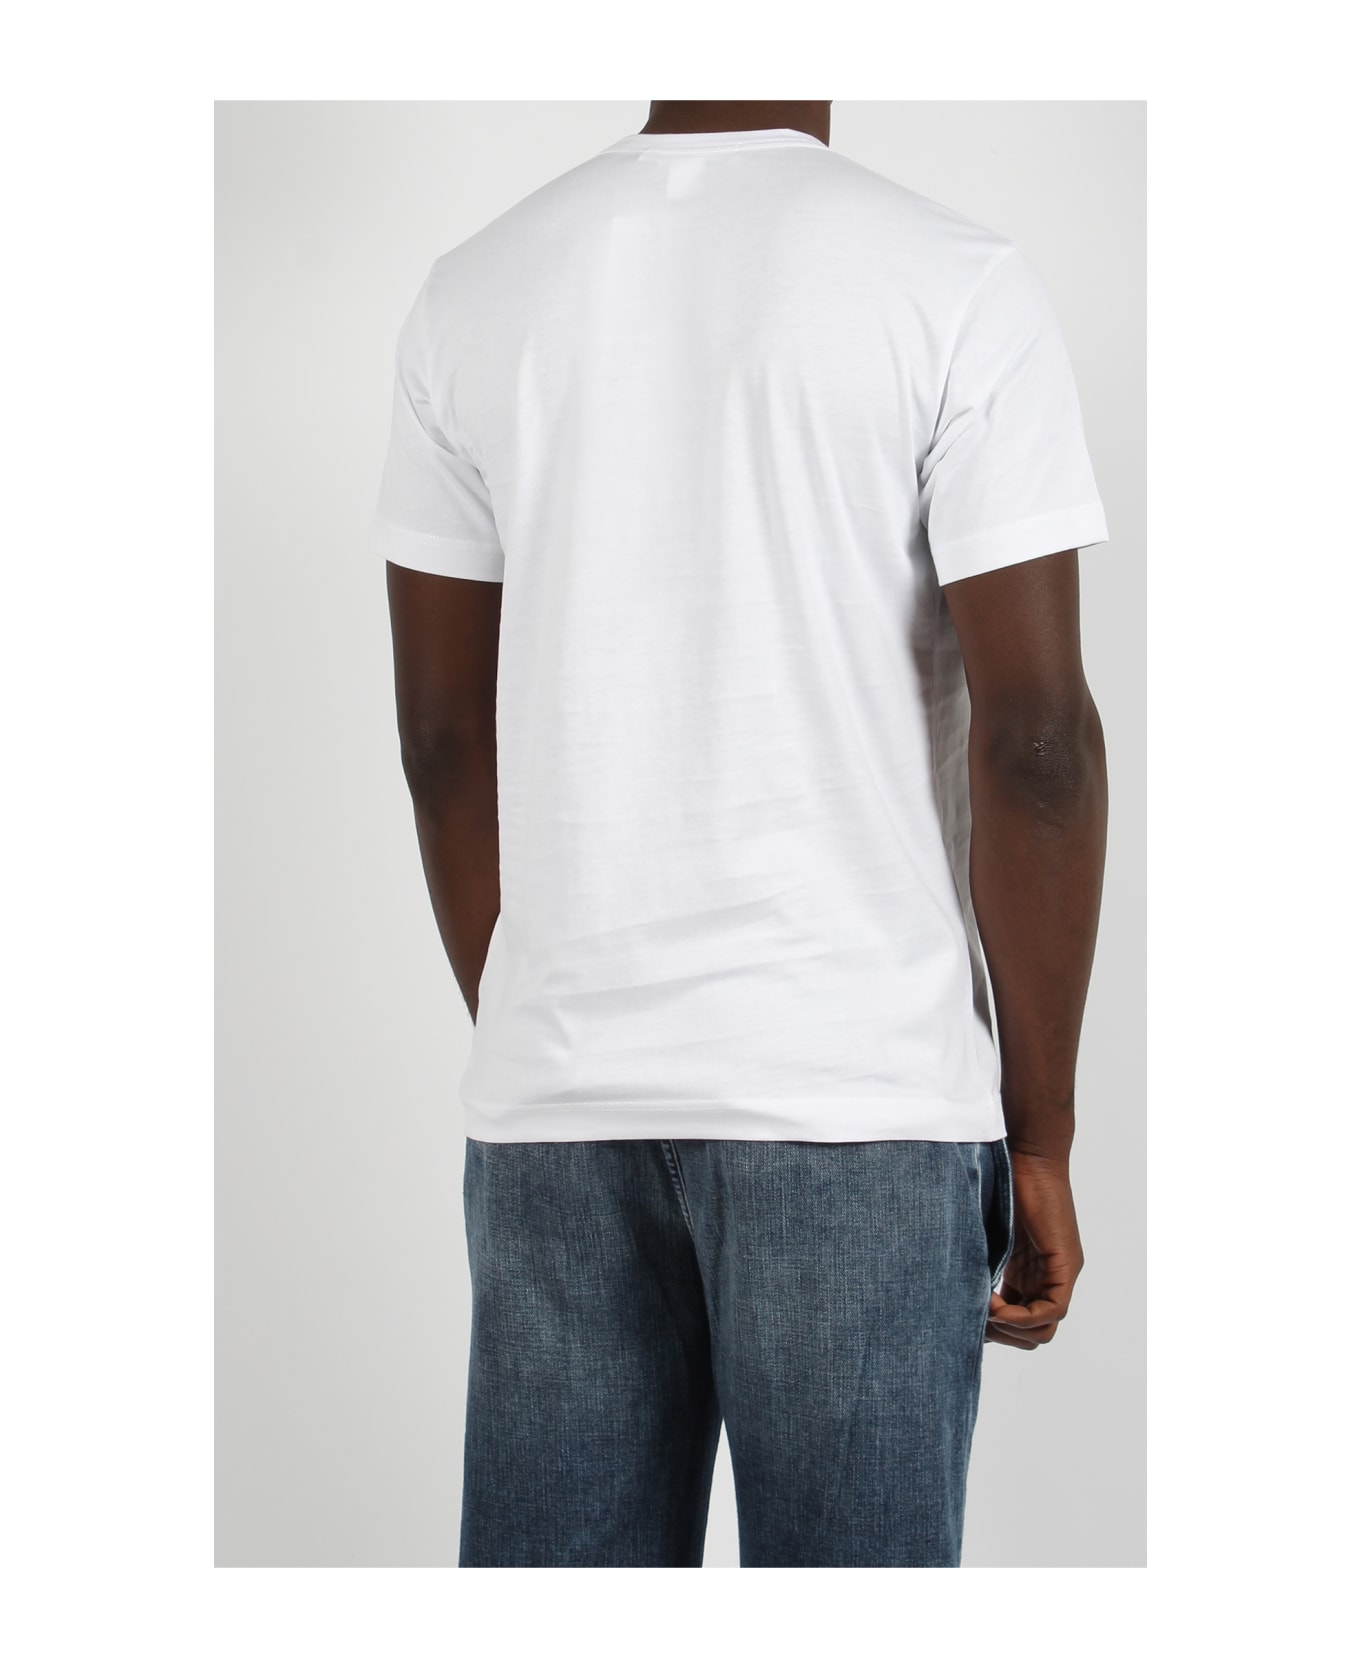 Comme des Garçons Shirt Andy Warhol T-shirt - White